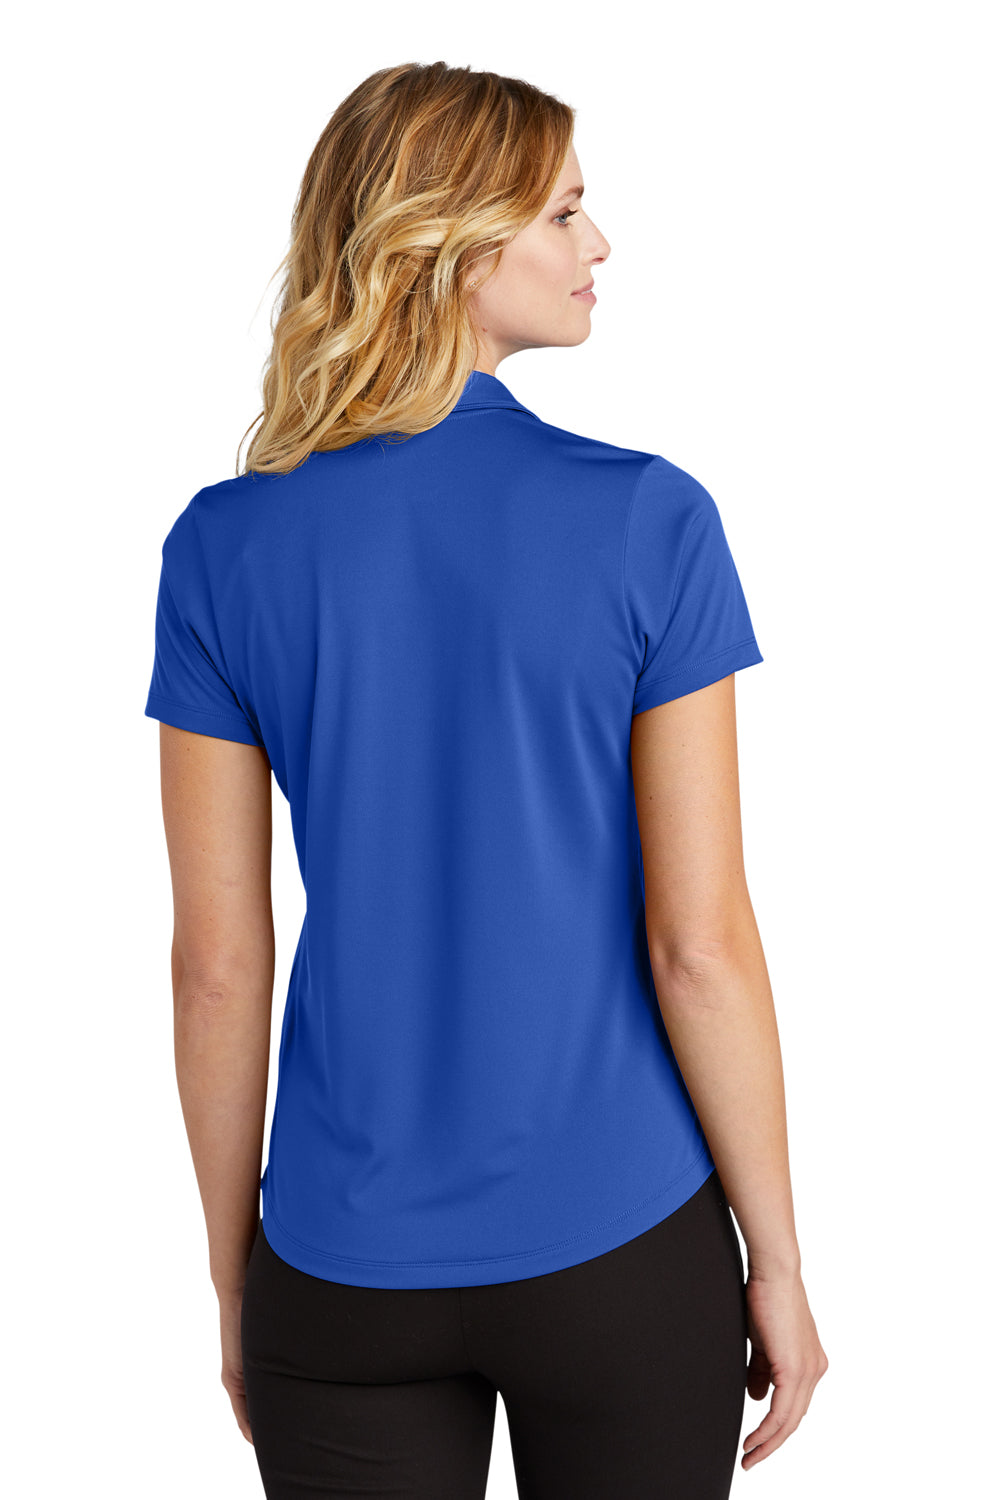 Port Authority LK864 C-Free Performance Short Sleeve Polo Shirt True Royal Blue Back